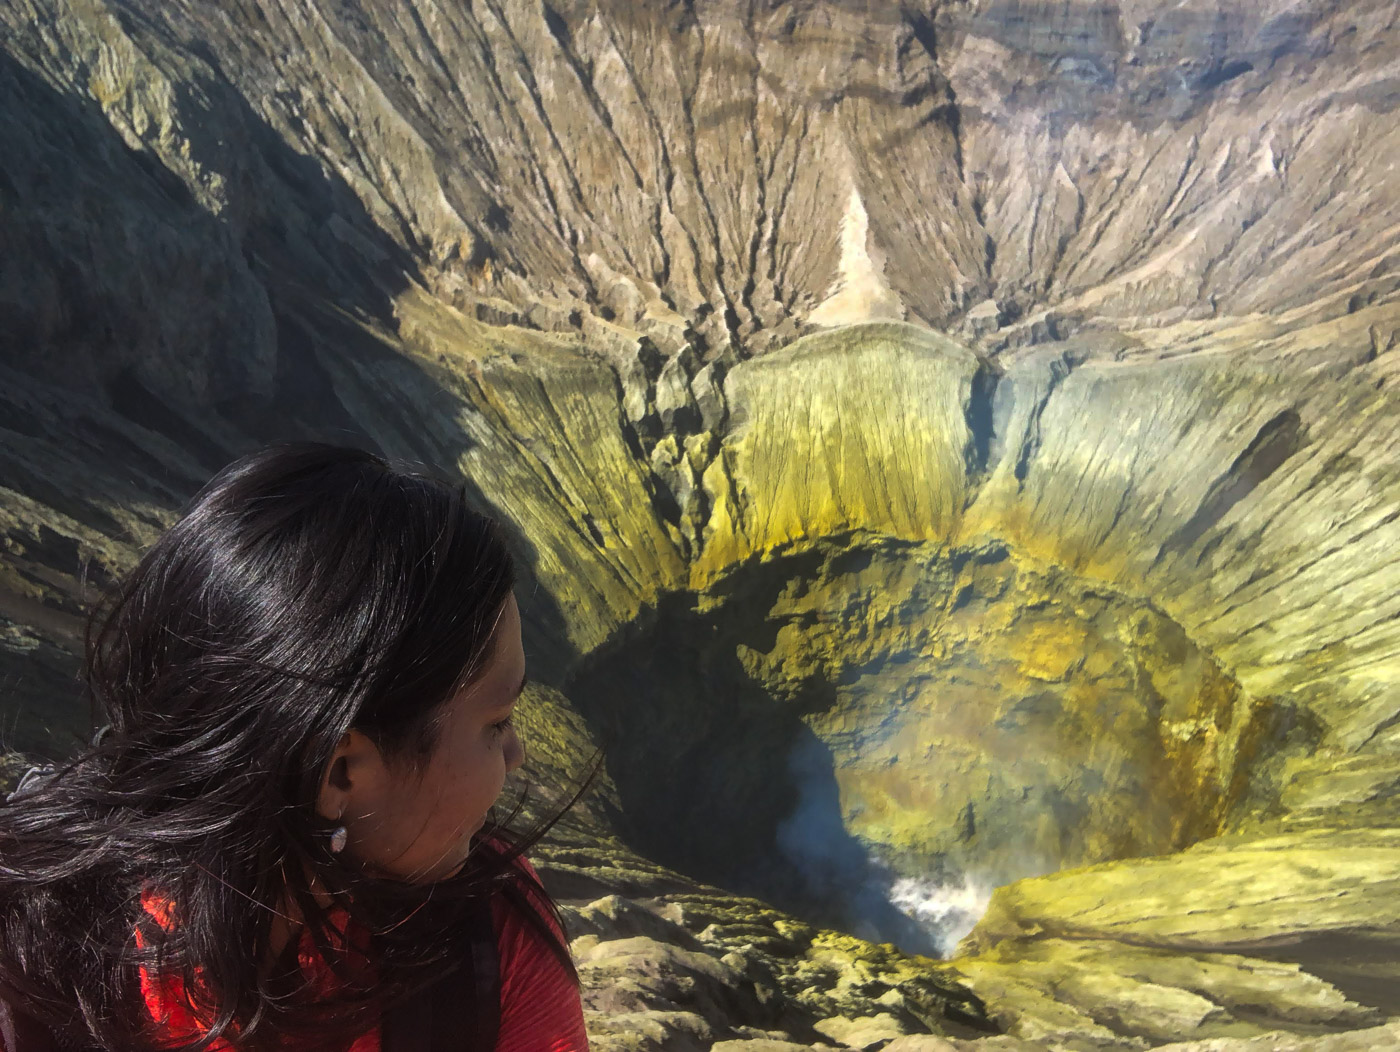 Mount_Bromo_Java_Indonesia_Active_Volcano_Hiking_Trekking_Solo_Travel_Blogger_The_Sassy_Pilgrim_Travel_Tips_Guide_Kawah_Ijen_Sulphuric_Lakes_Sunrise